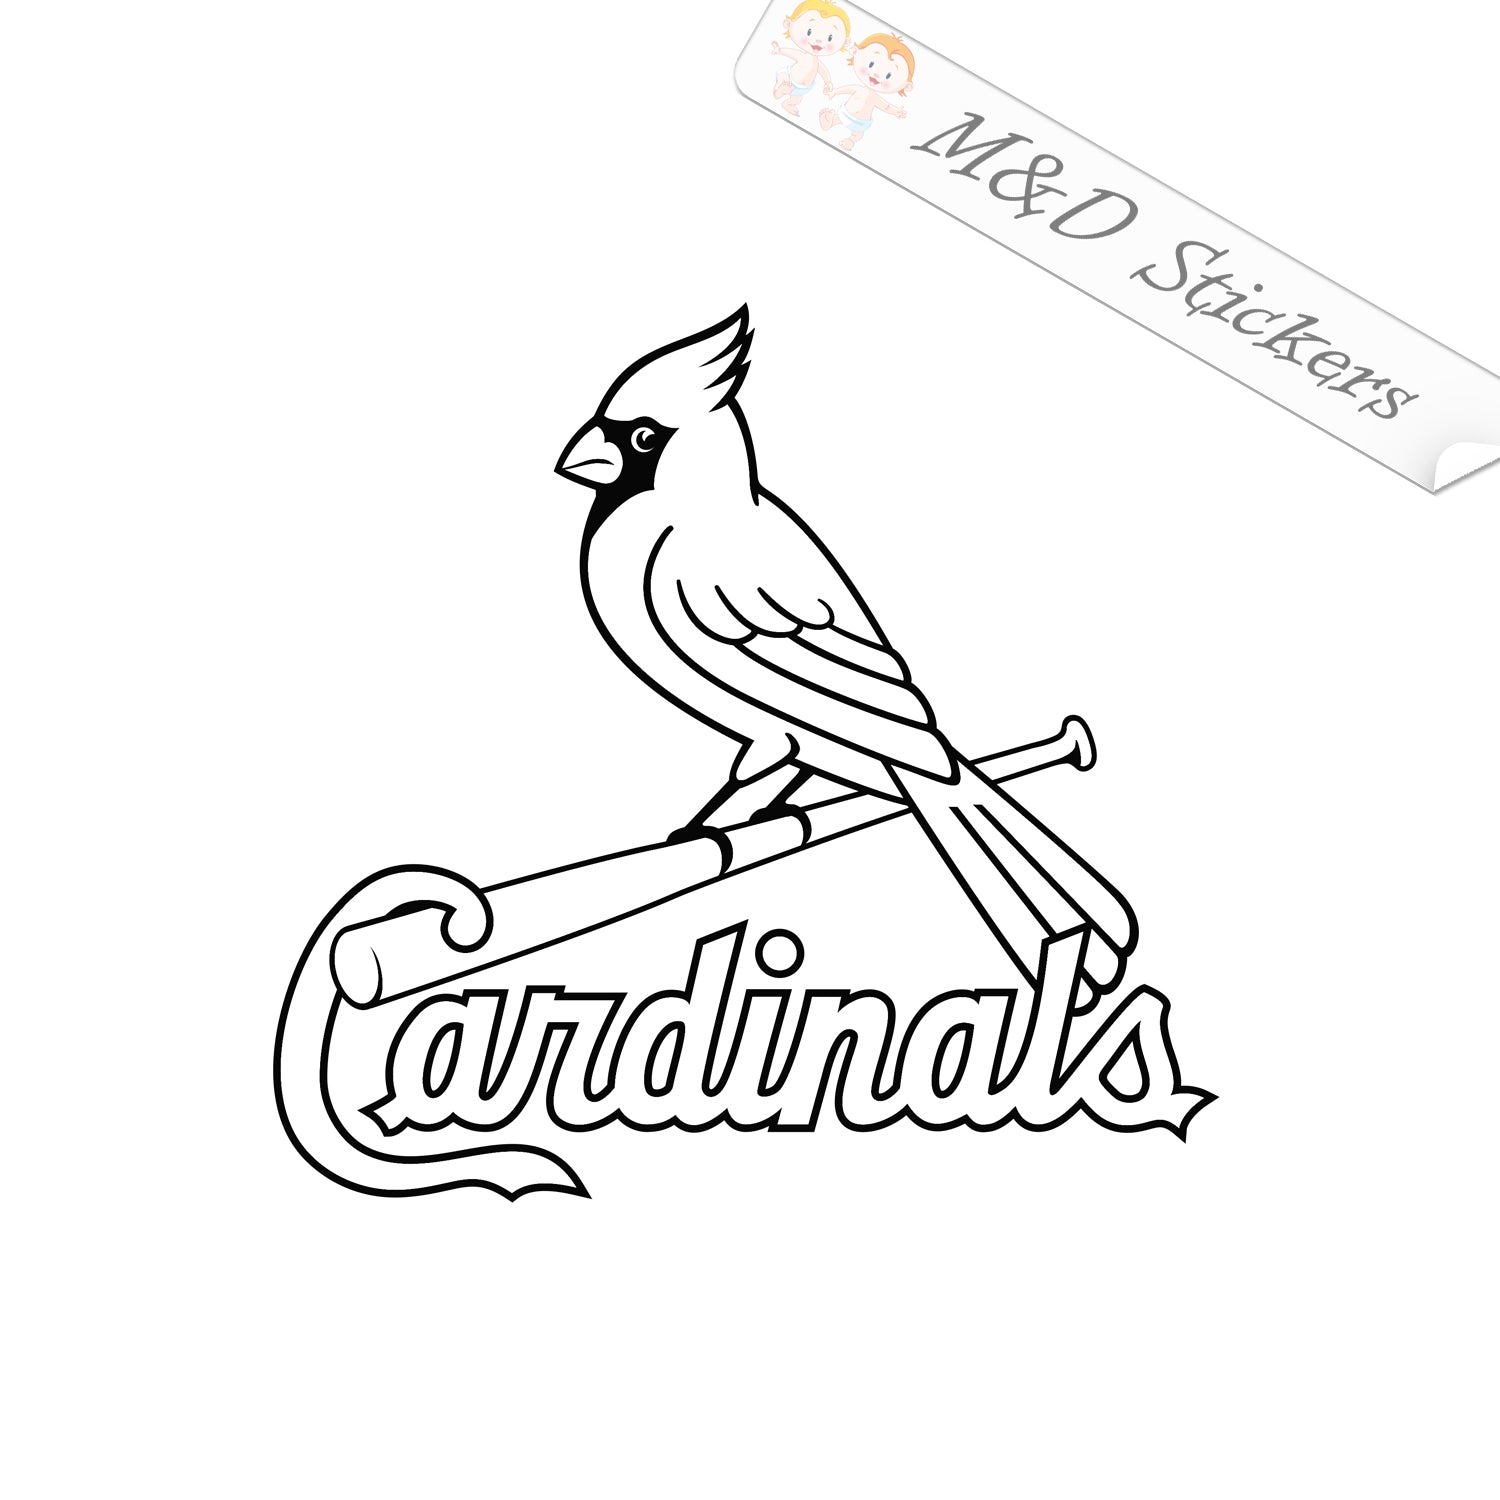 X st louis cardinals logo vinyl decal sticker different colors siz â md stickers